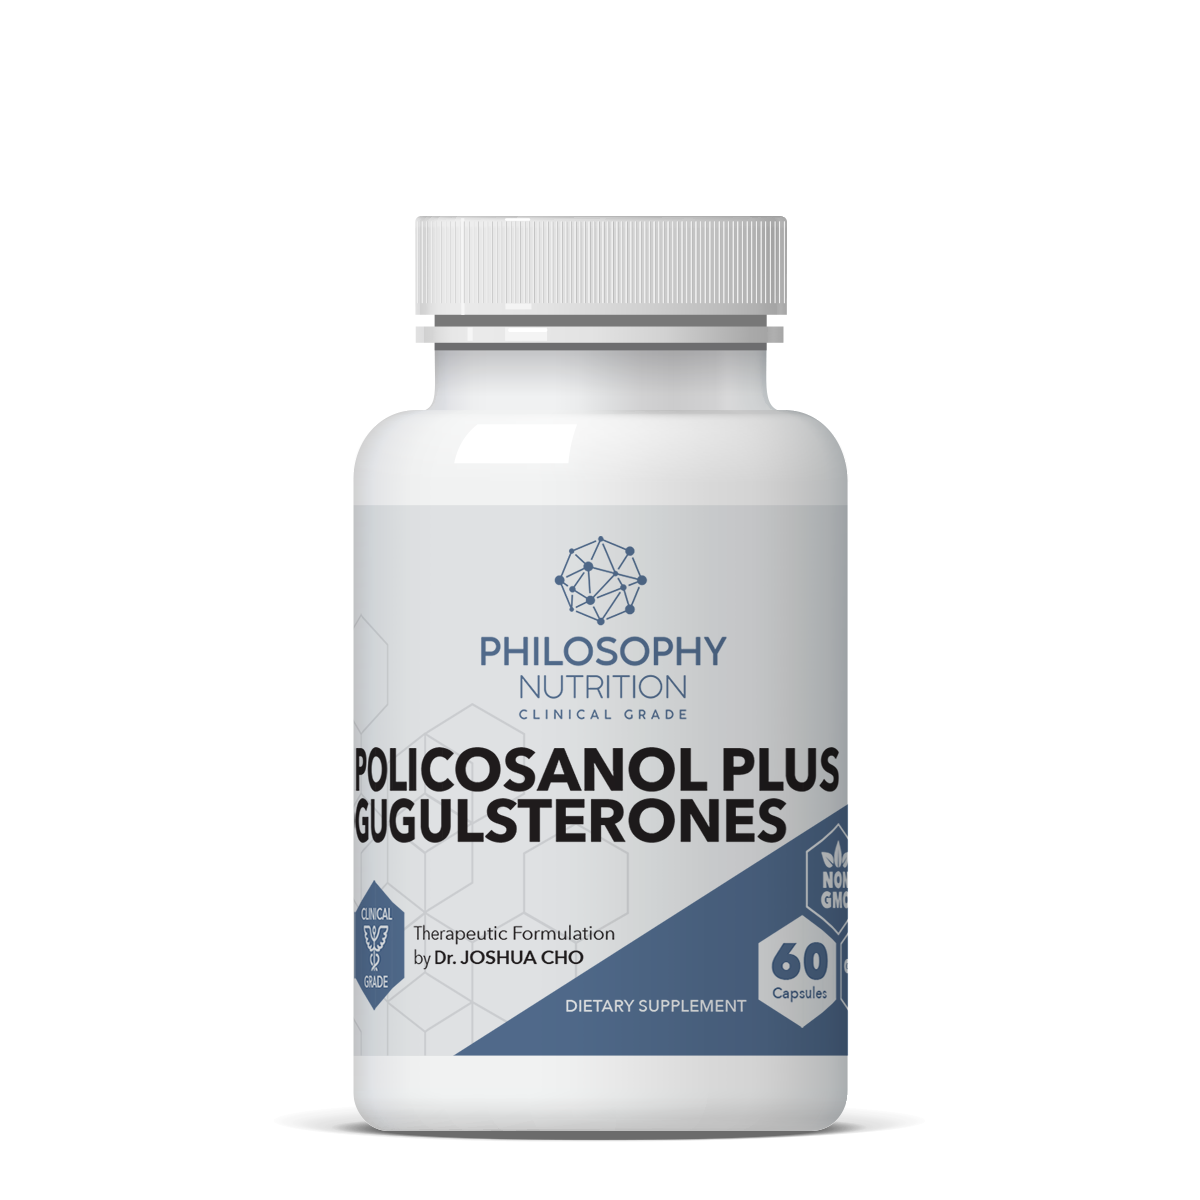 Policosanol Plus Gugulsterones_0